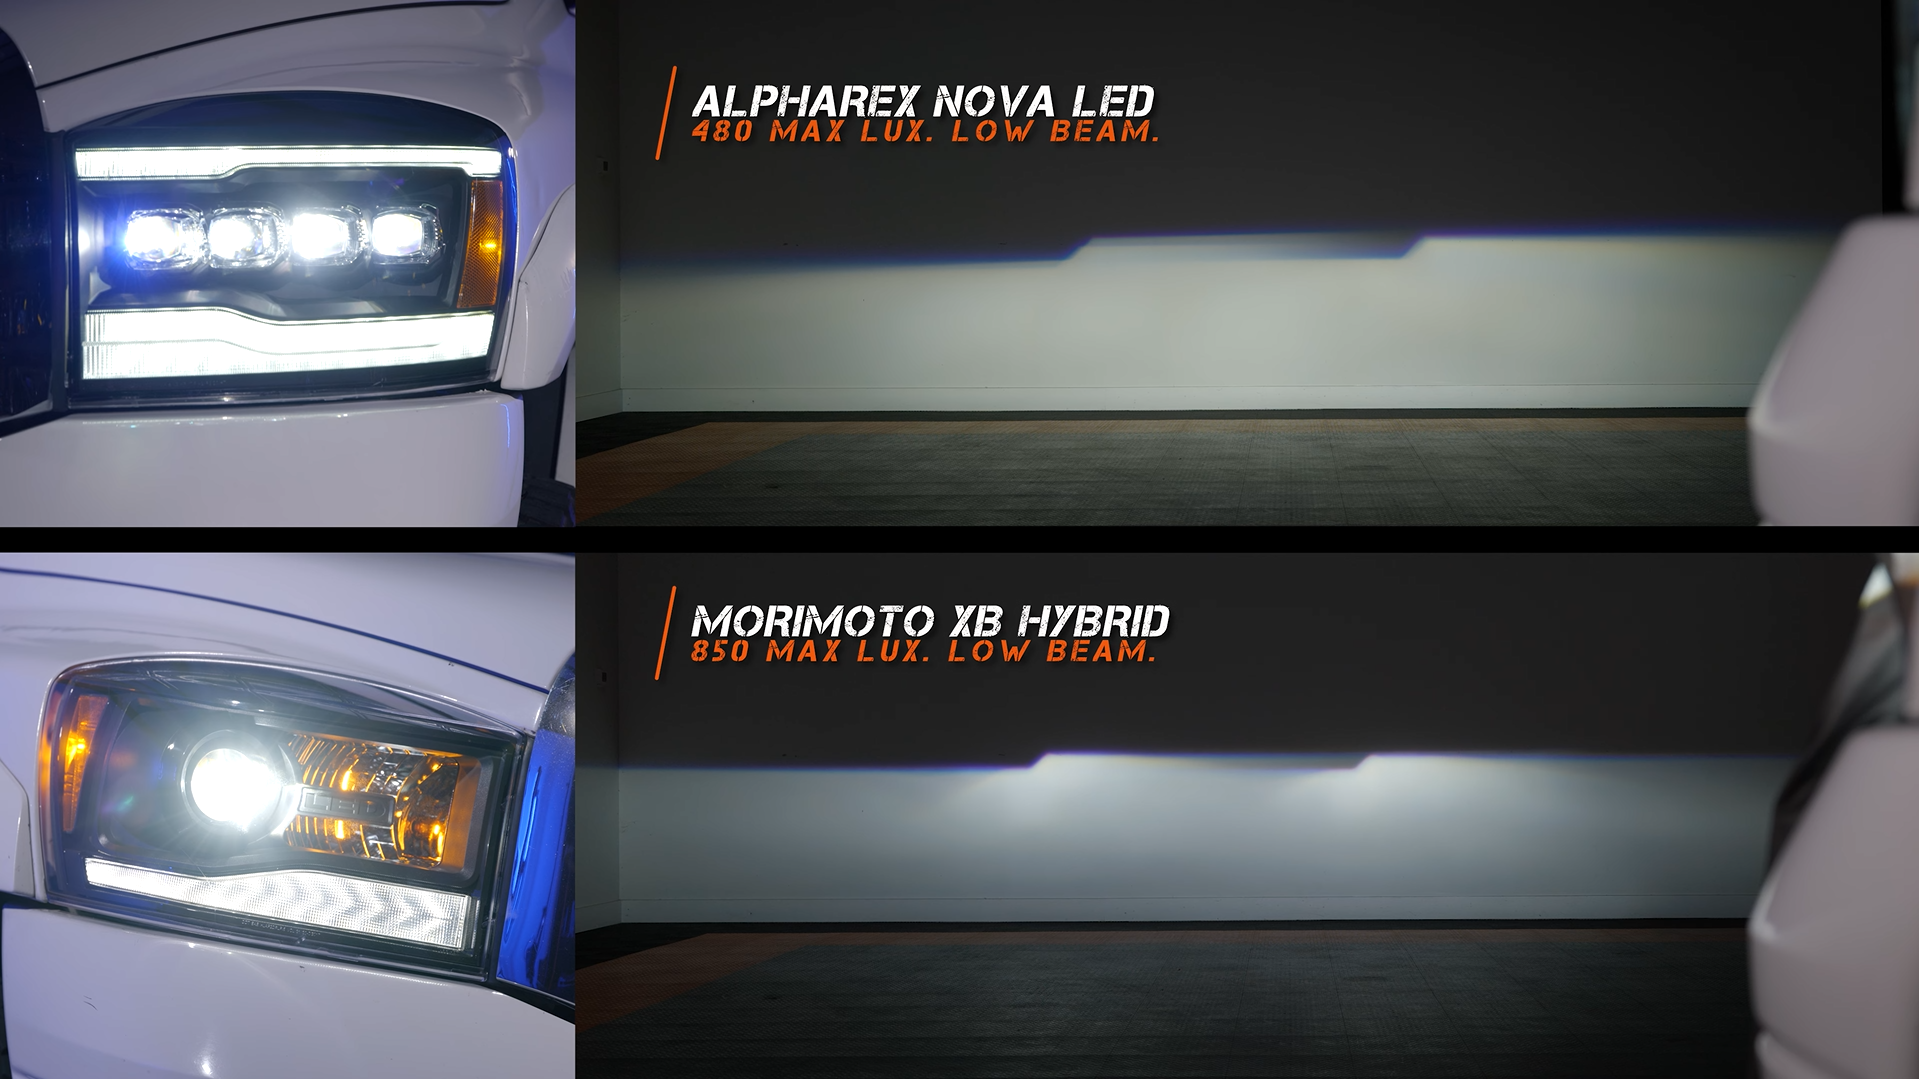 A comparison of brightness between the Alpharex Nova LED and the Morimoto XB Hybrid headlights.